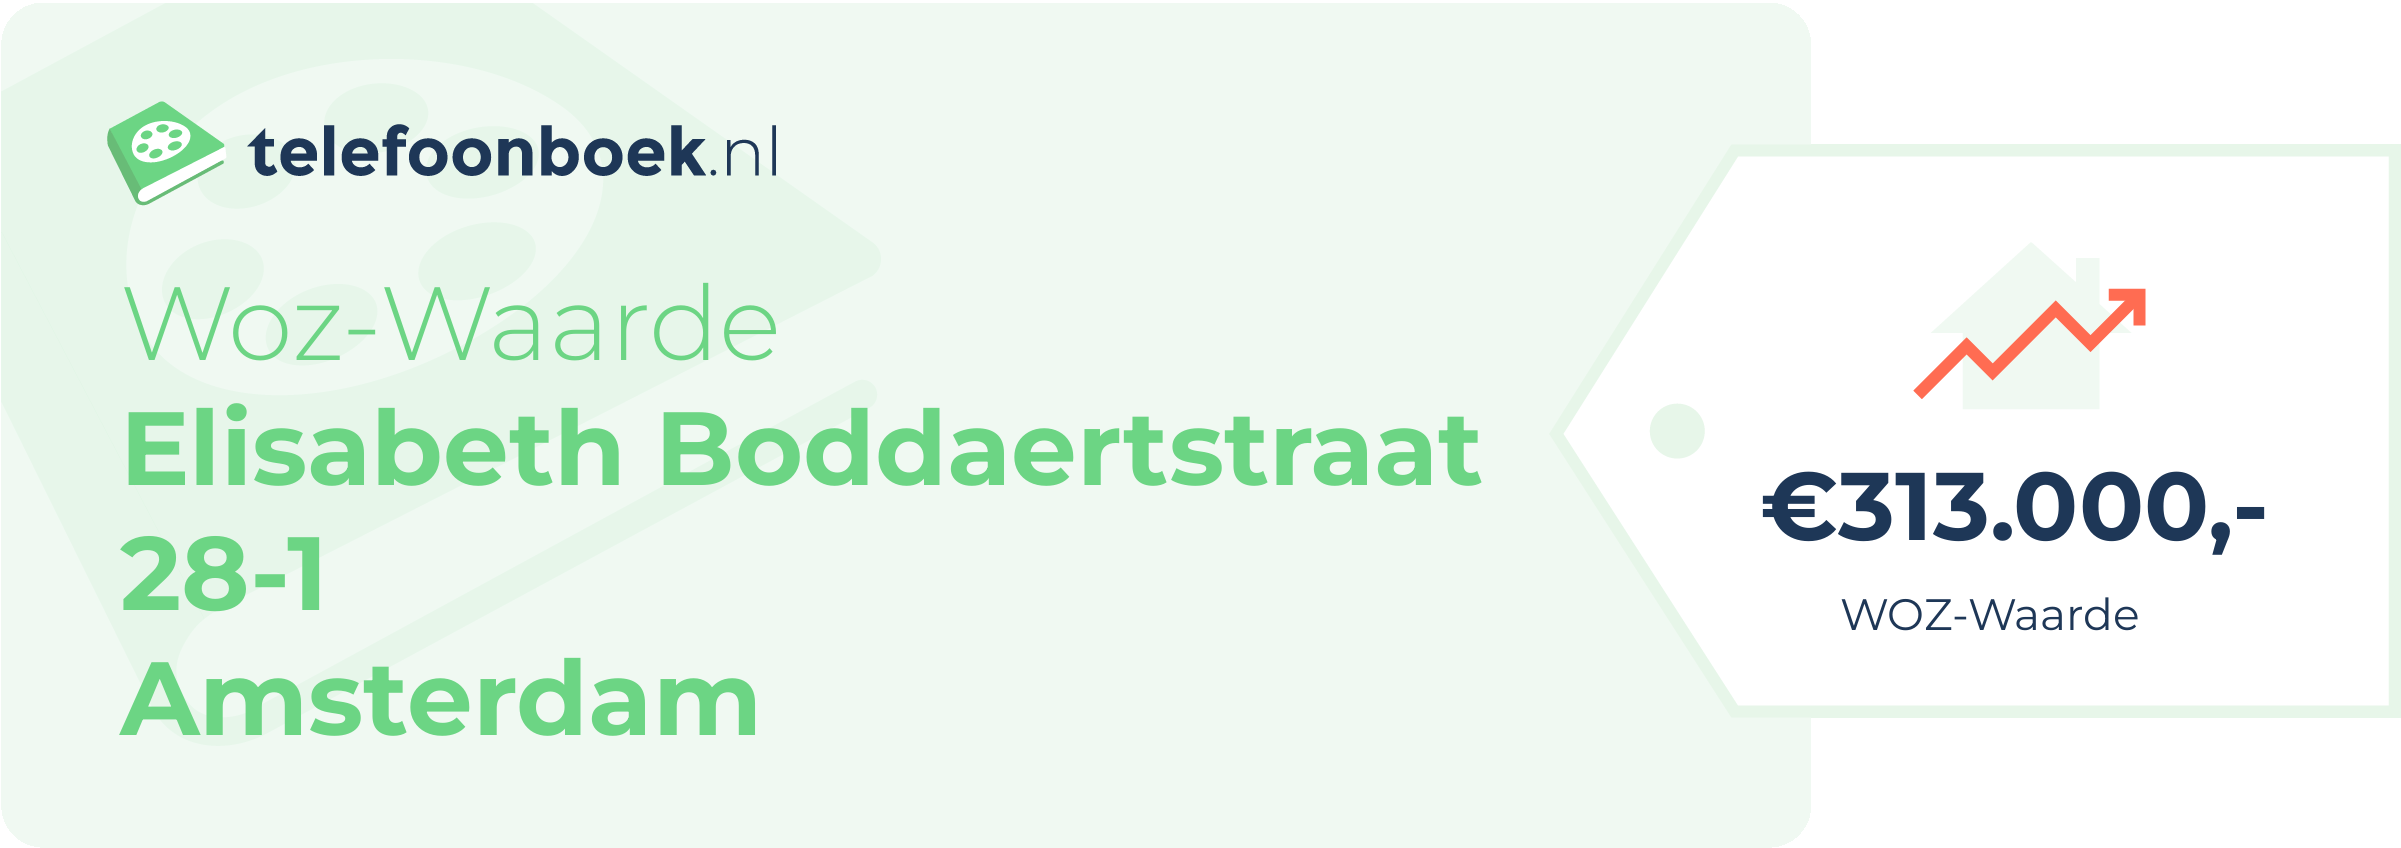 WOZ-waarde Elisabeth Boddaertstraat 28-1 Amsterdam